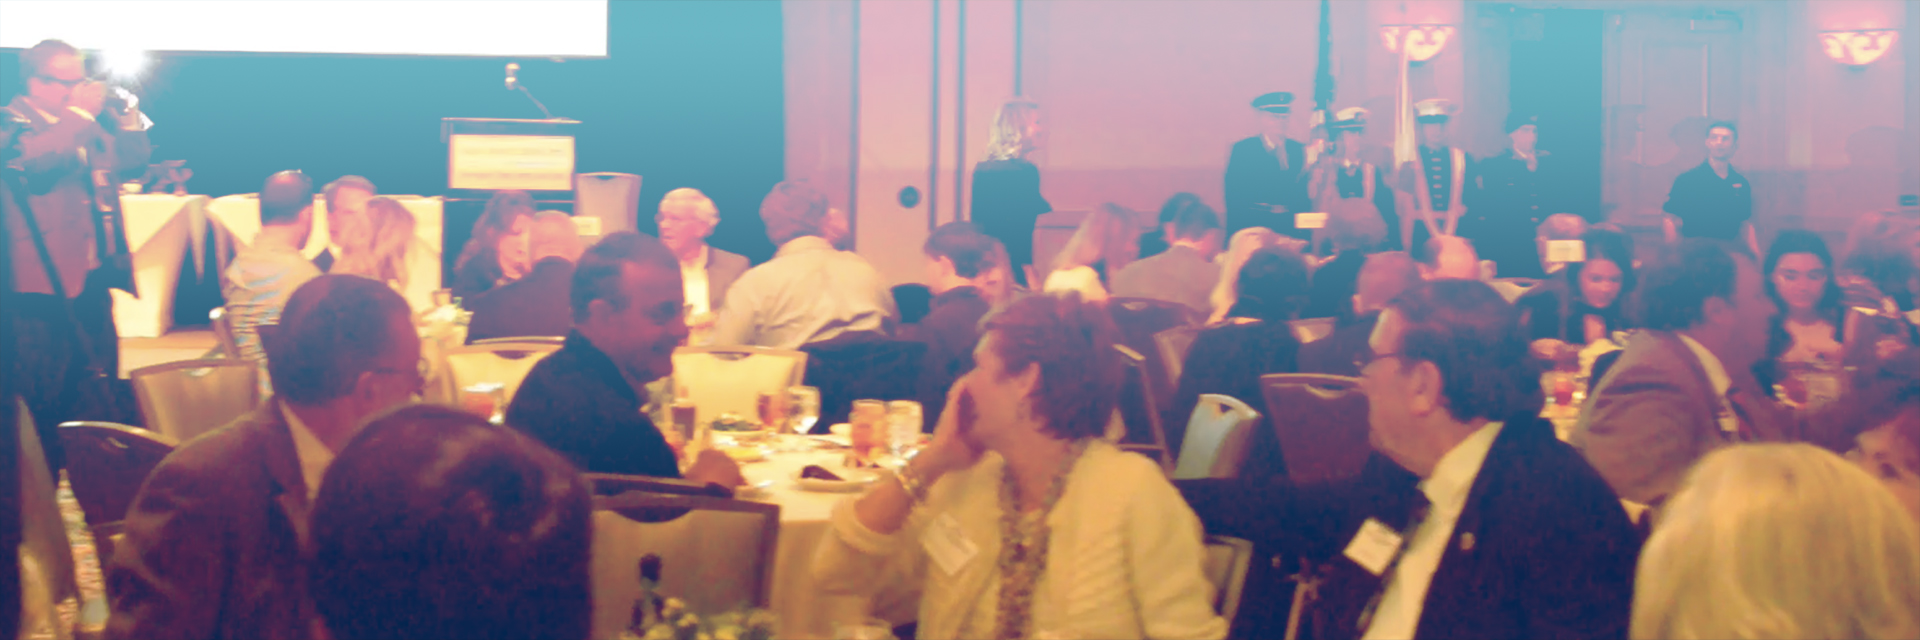 Hall-of-Honor-Annual-Meeting-Banquet-Auburn-Marriott-Grand-National-Hotel-AL-sm